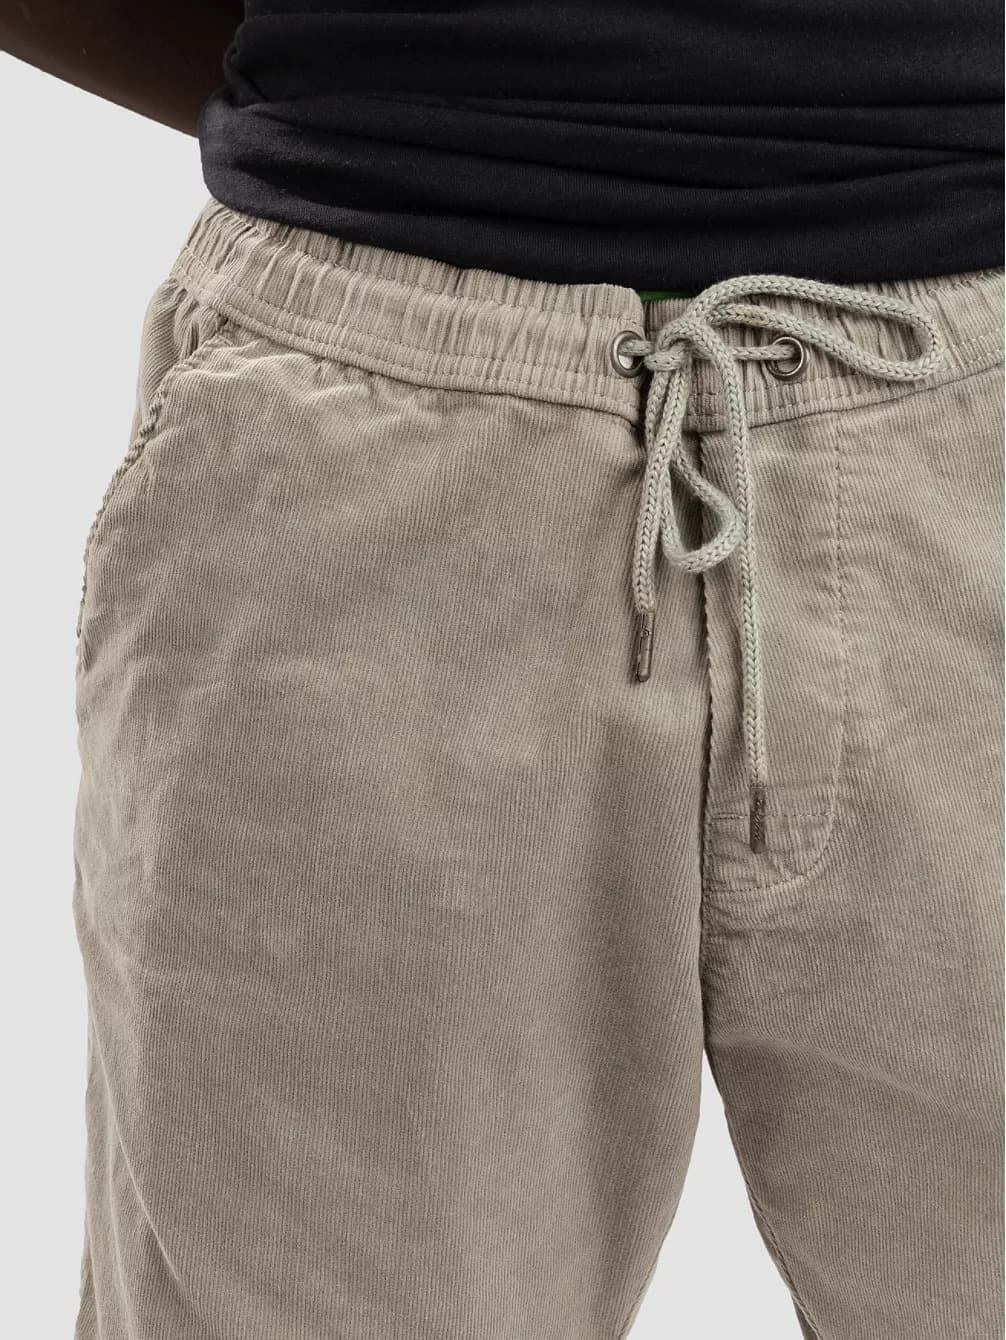 Pantalón corto REELL REFLEX EASY SHORT bay cord grey mint - Imagen 3